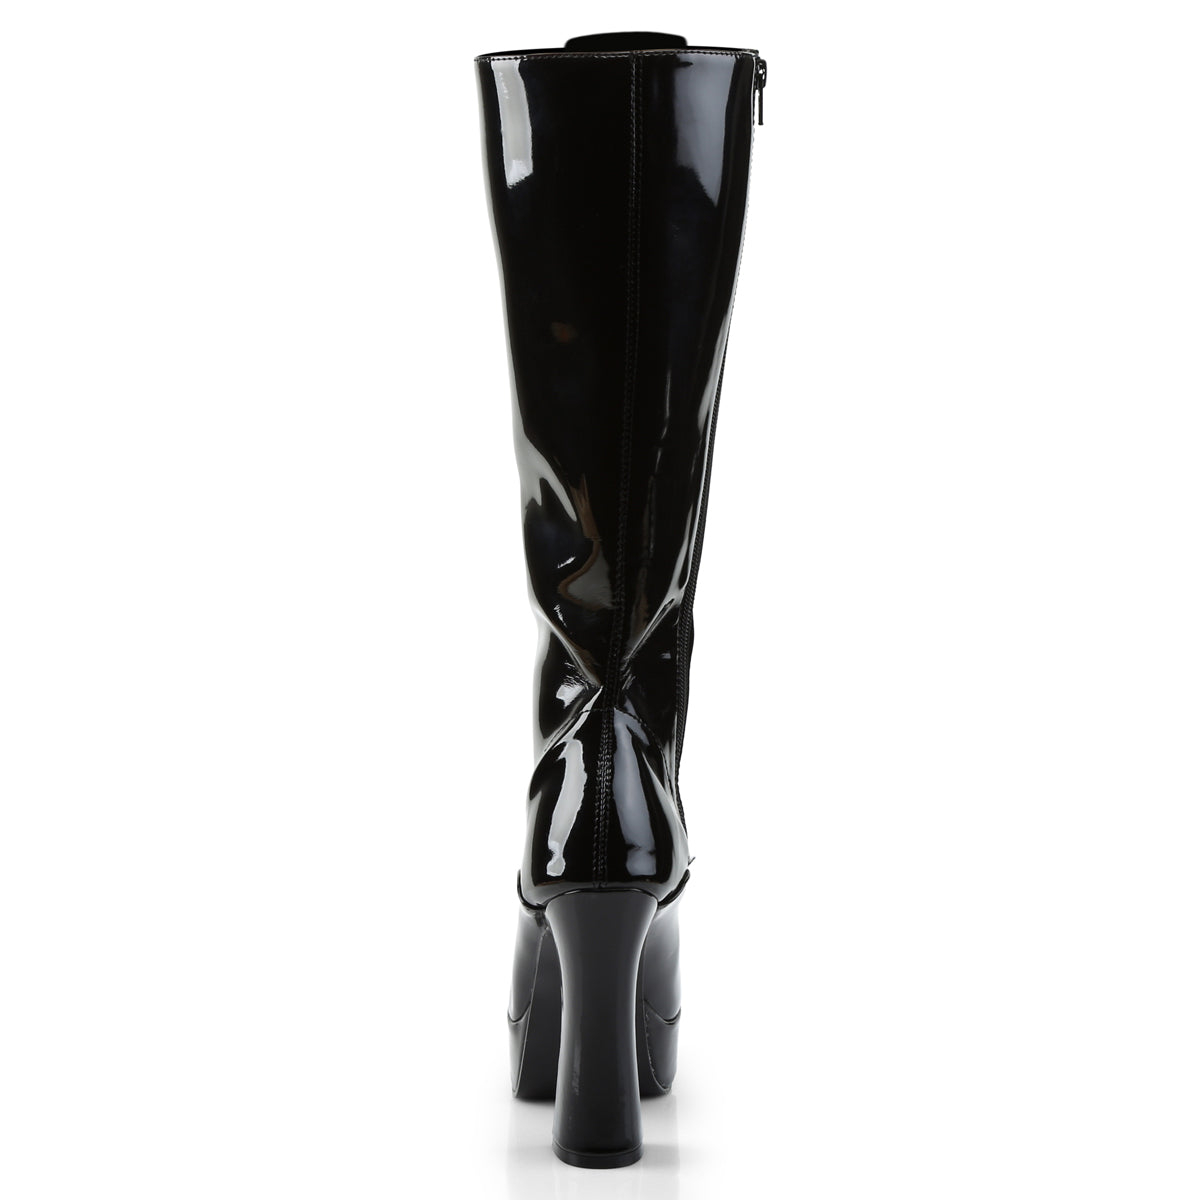 ELECTRA-2020 Pleaser Black Patent Platform Shoes [Kinky Boots]